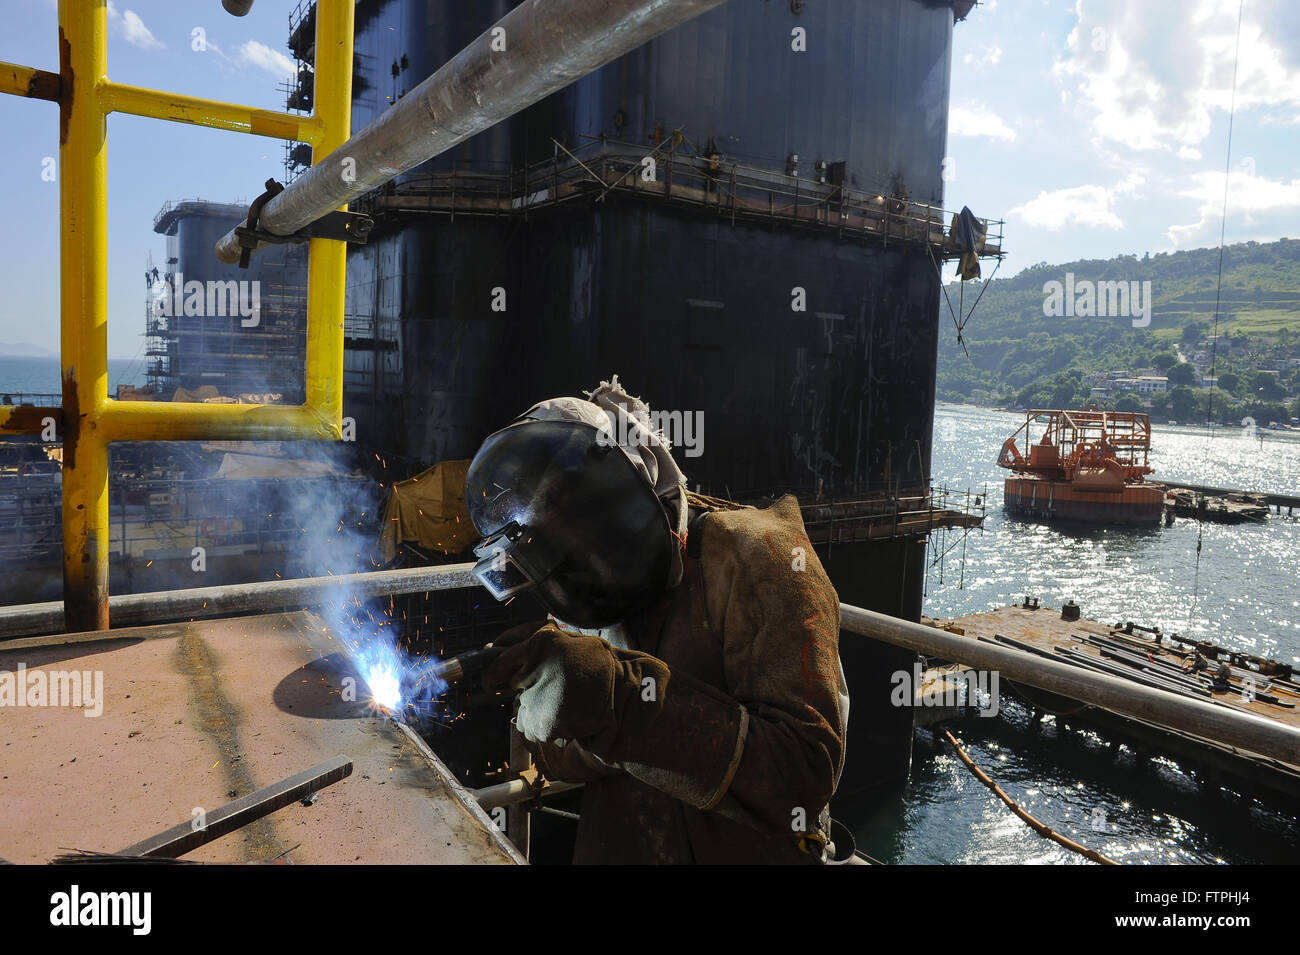 BrasFels shipyard in Angra dos Reis - Construction of oil platform Stock Photo